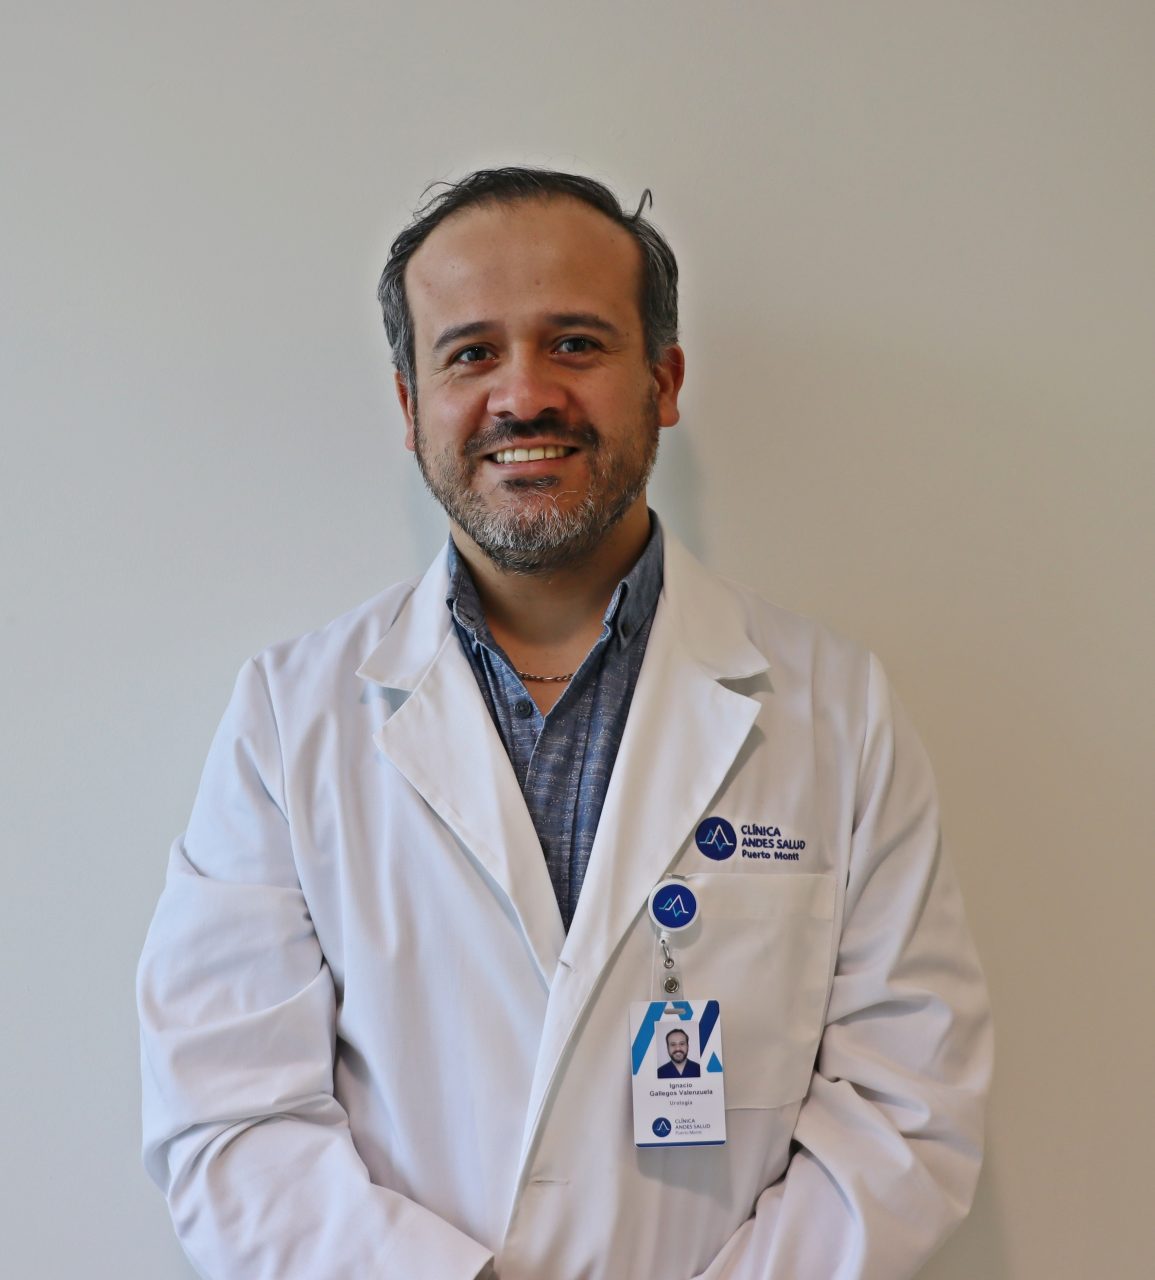 Dr. Ignacio Gallegos Valenzuela